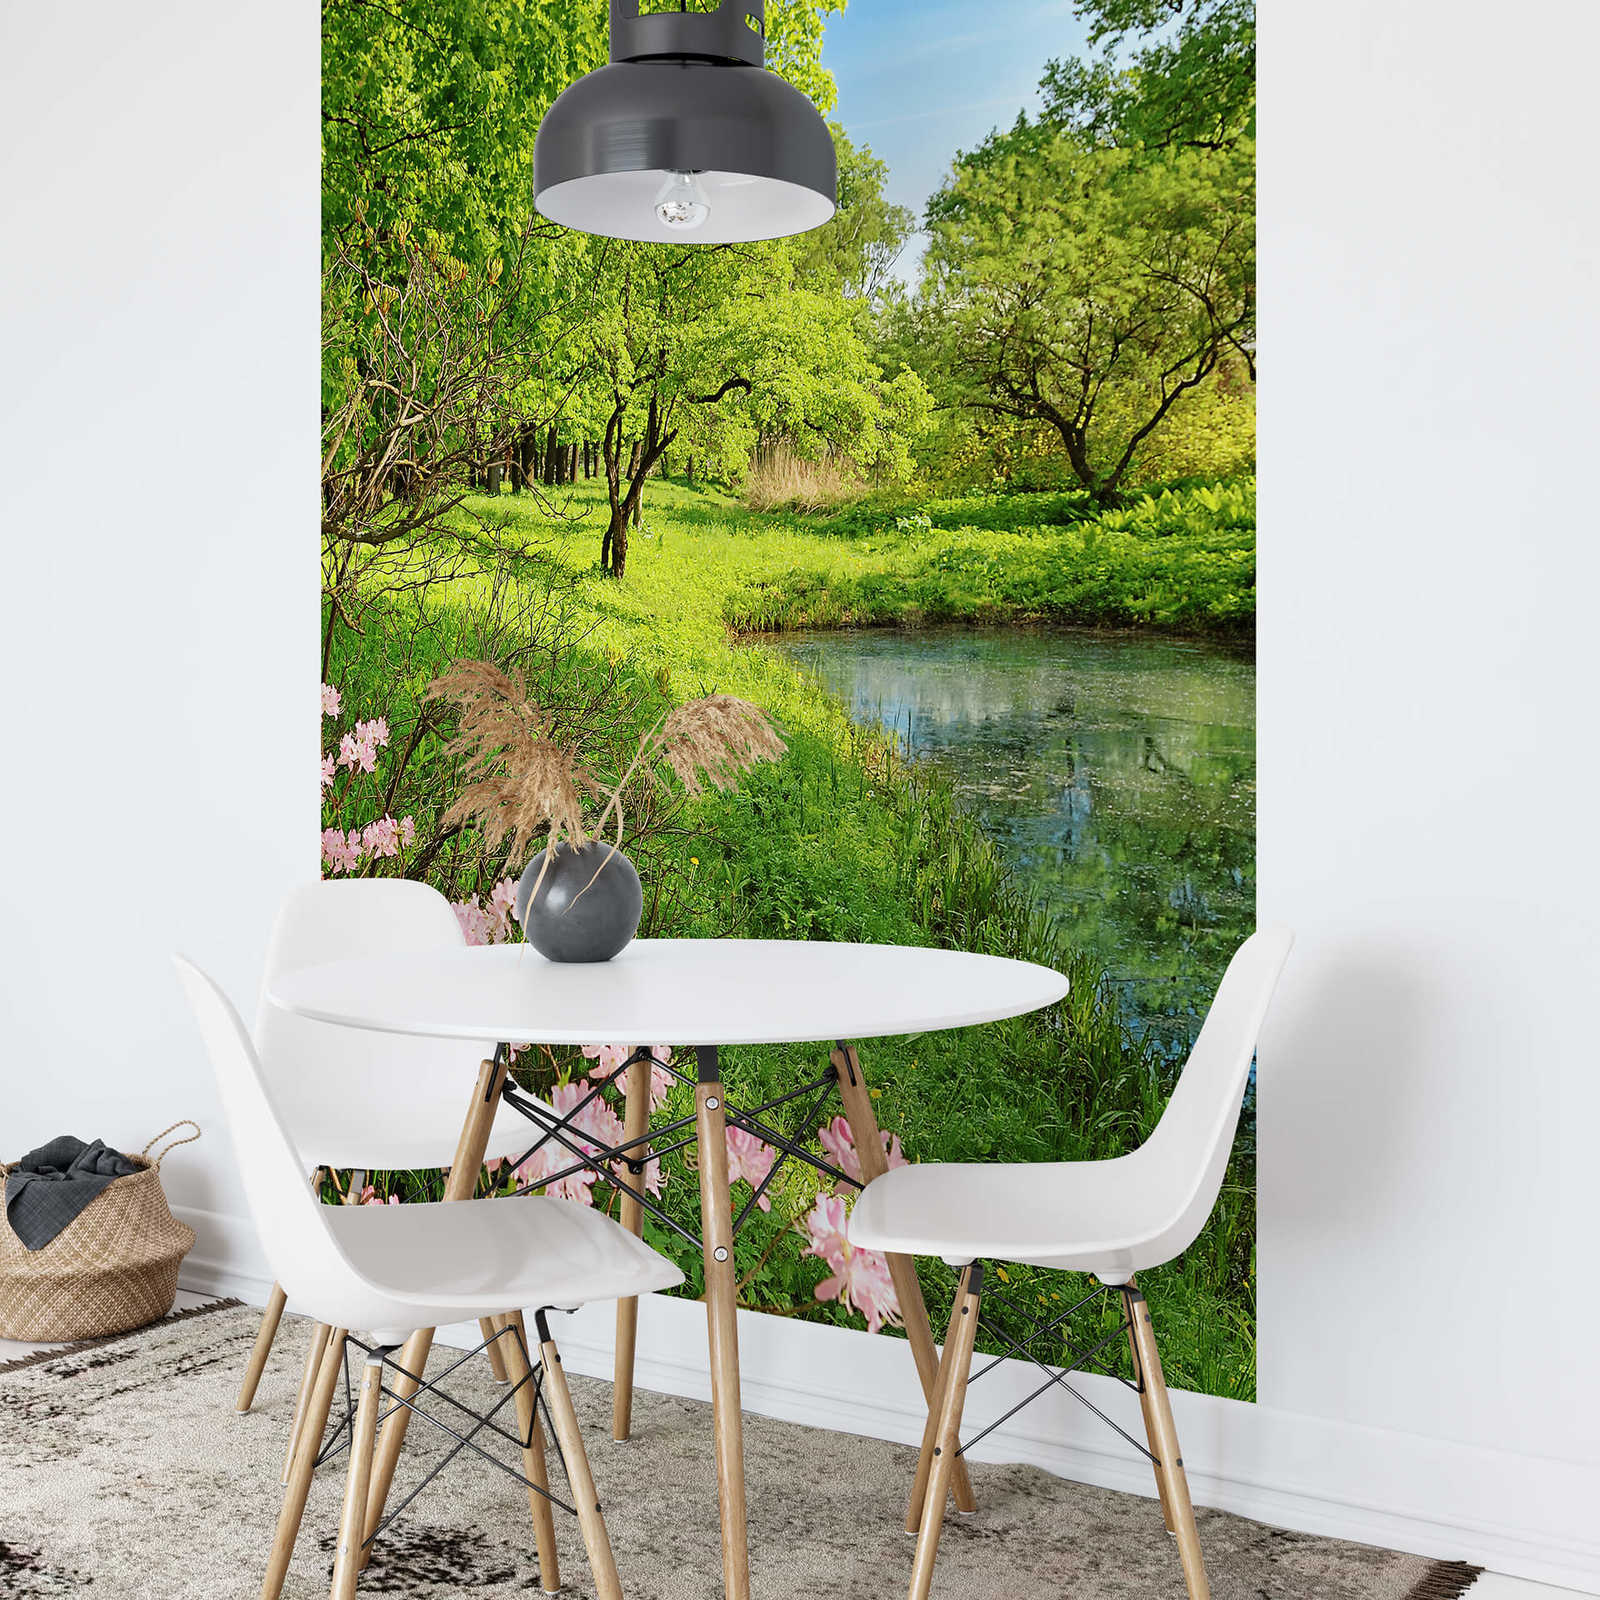             Papel pintado fotográfico de primavera con paisaje de la naturaleza, formato retrato
        